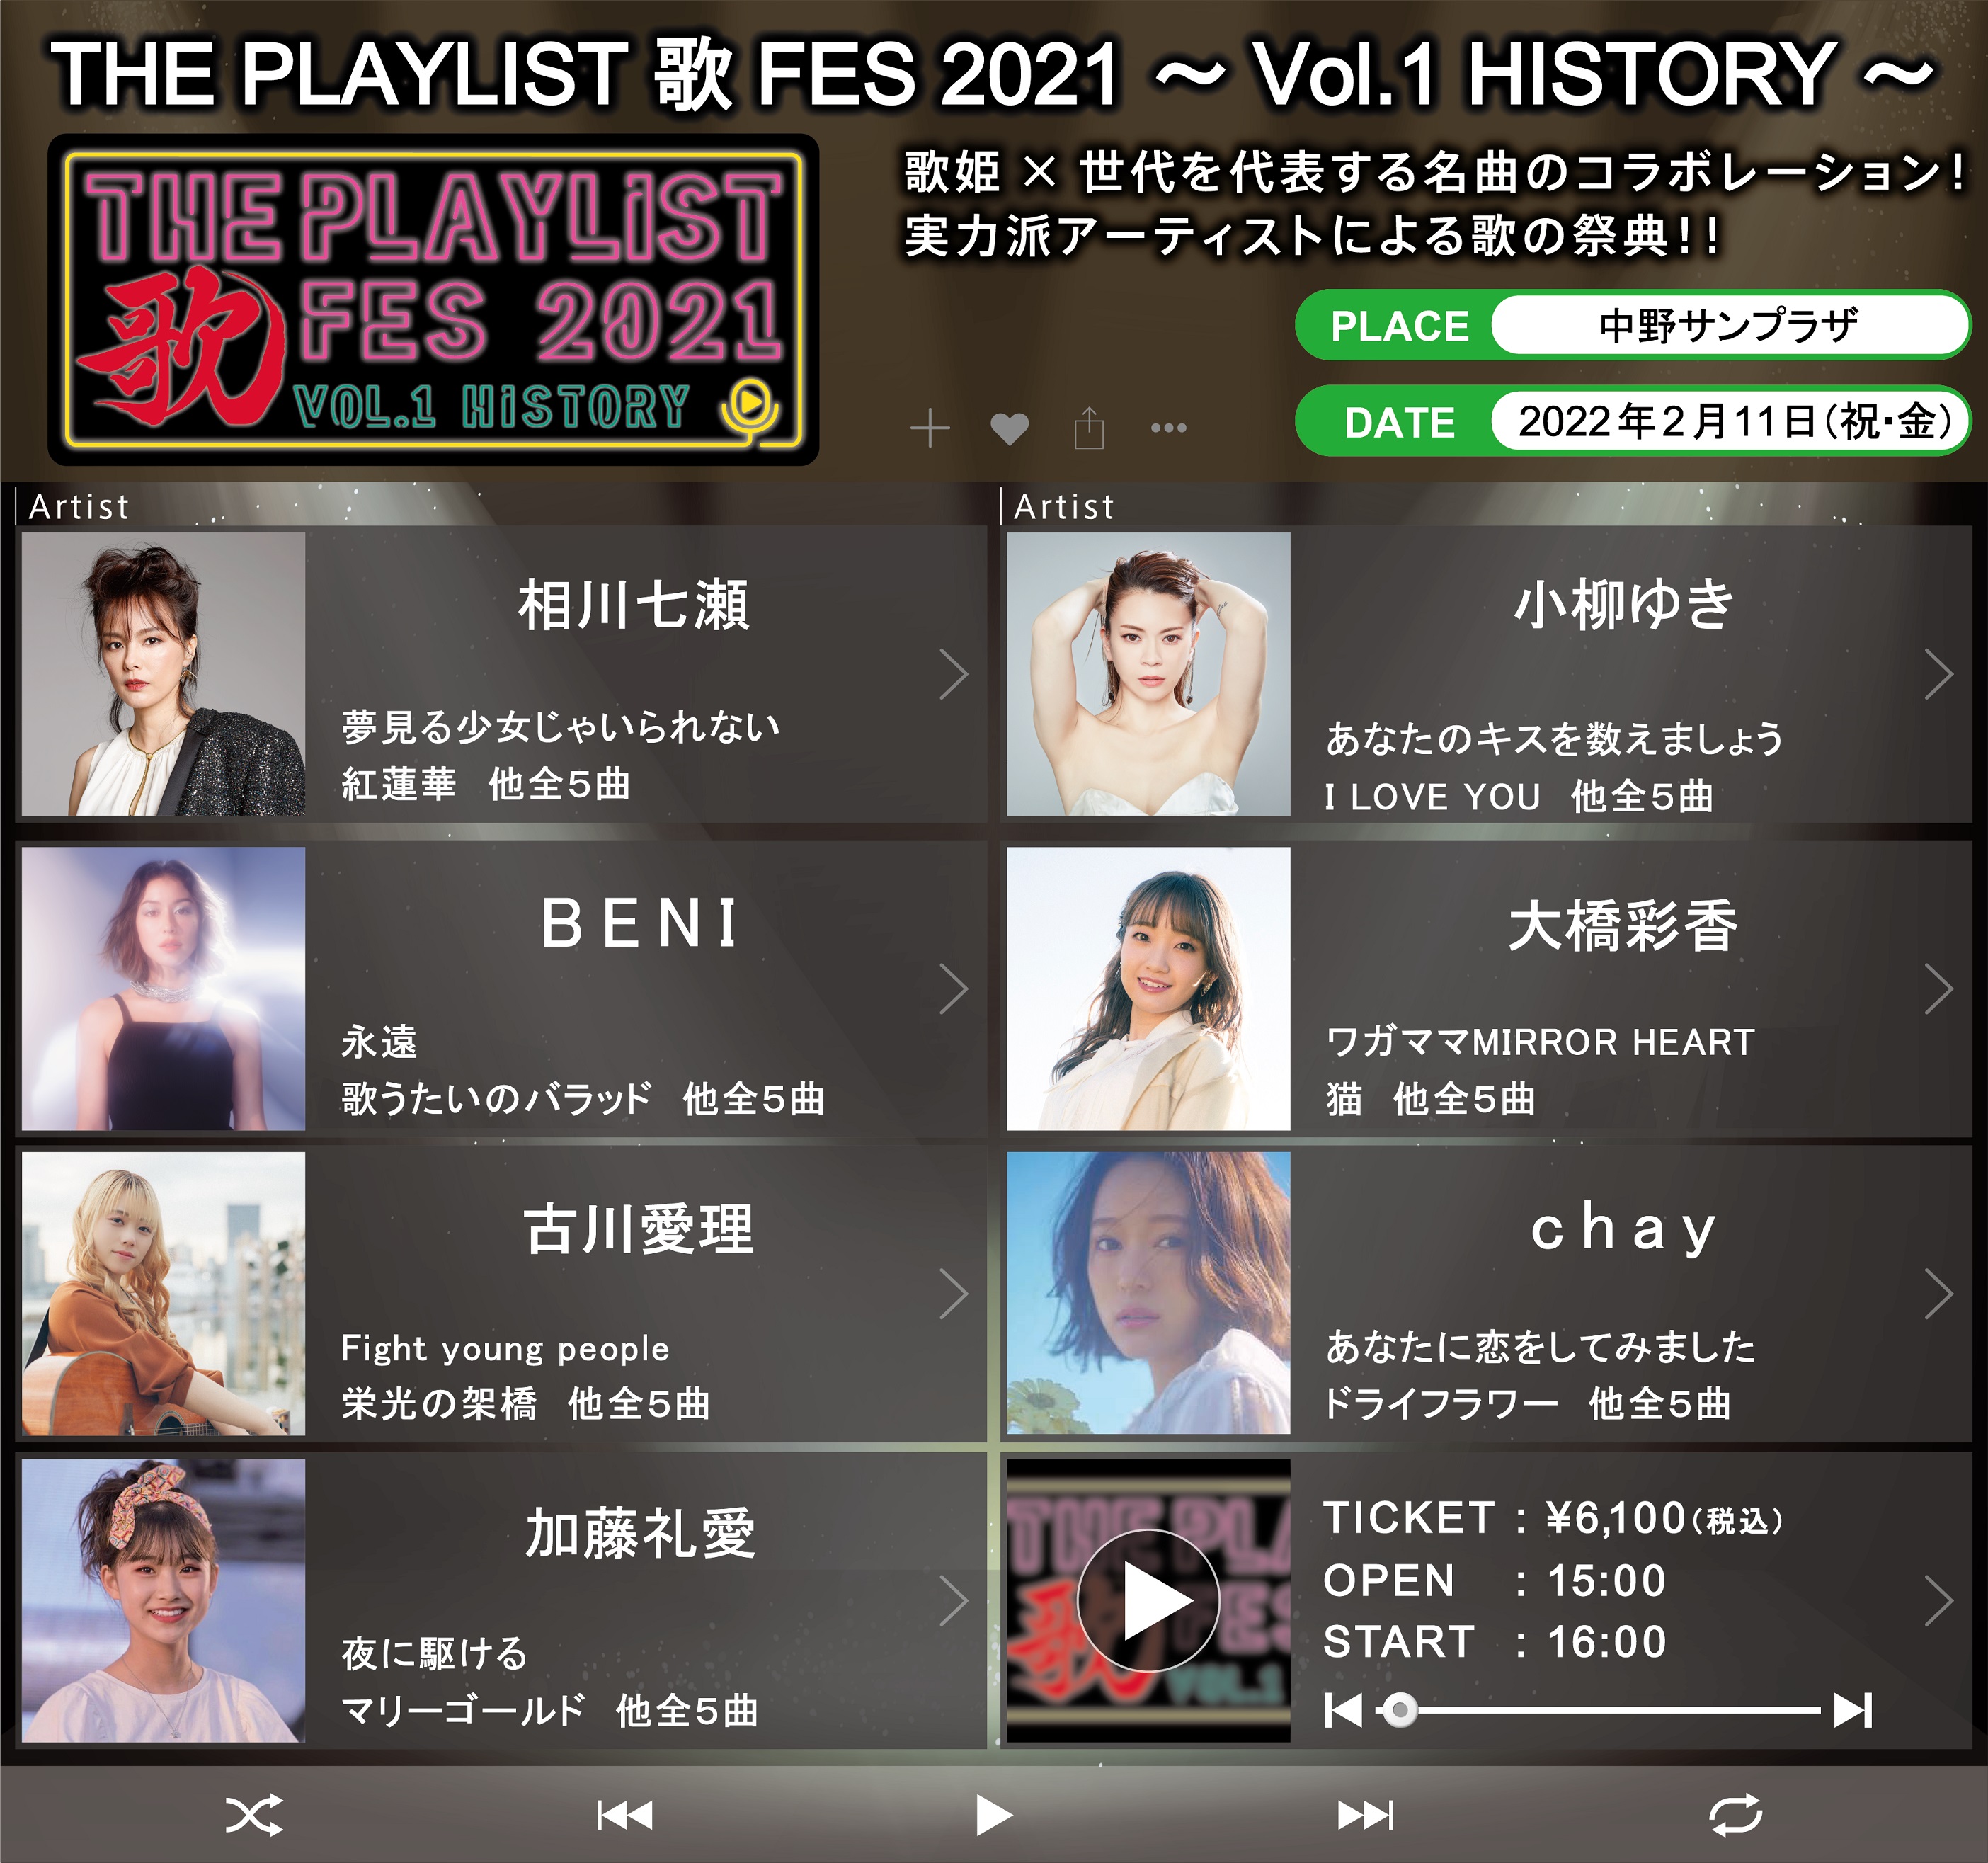 The Playlist 歌fes 21 Vol 1 History 延期スケジュール 出演者決定 歌姫 名曲のコラボレーション 笑顔 感動 涙する歌の祭典 Newscast